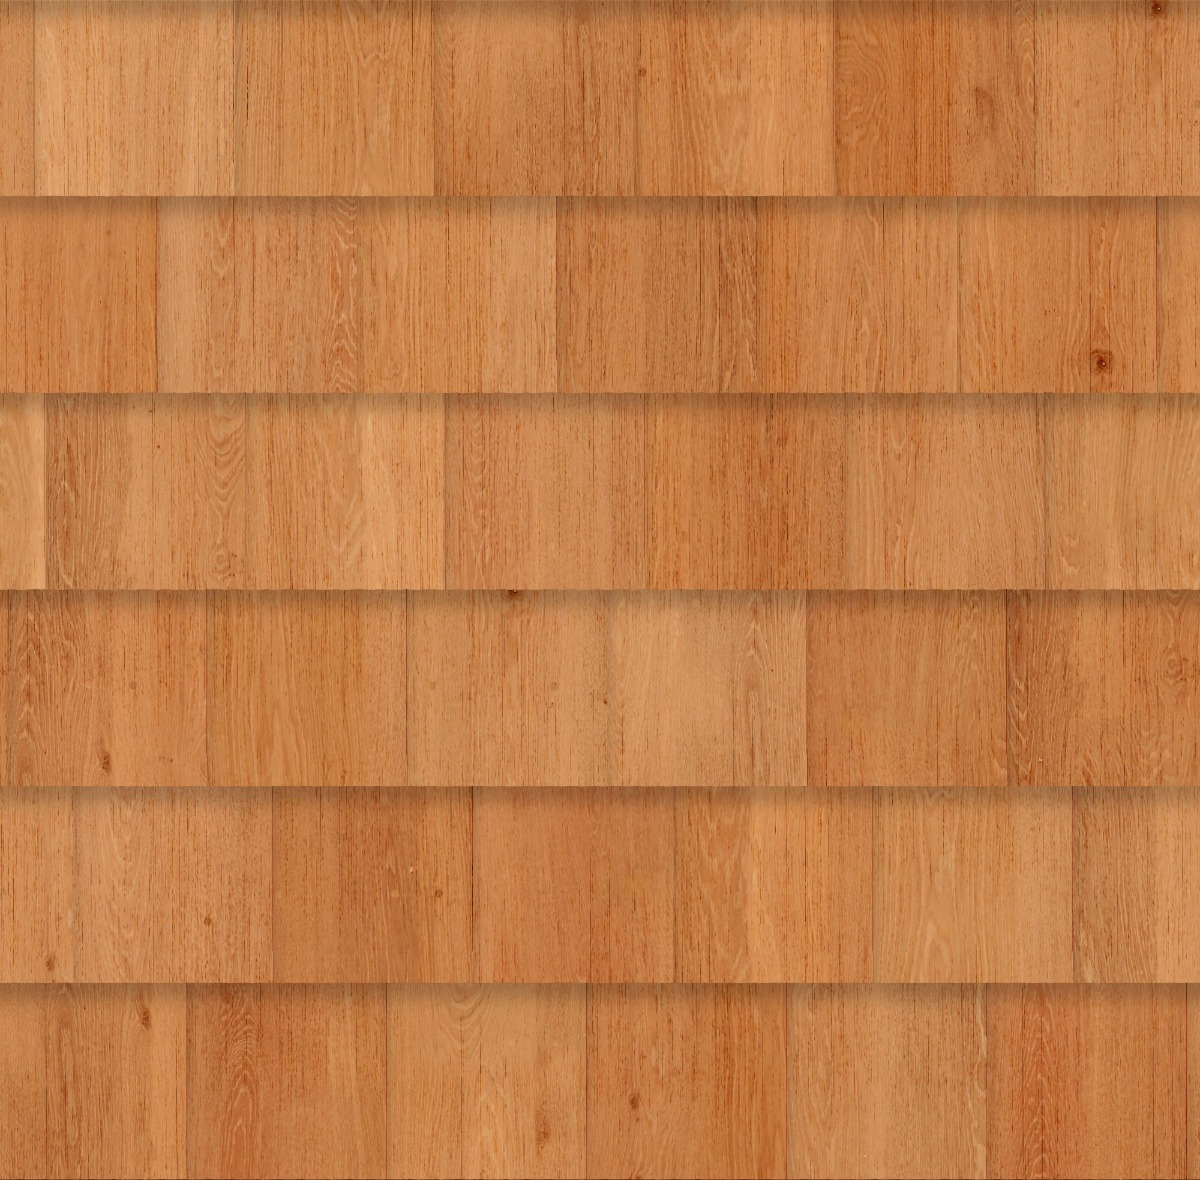 wood shingle siding texture